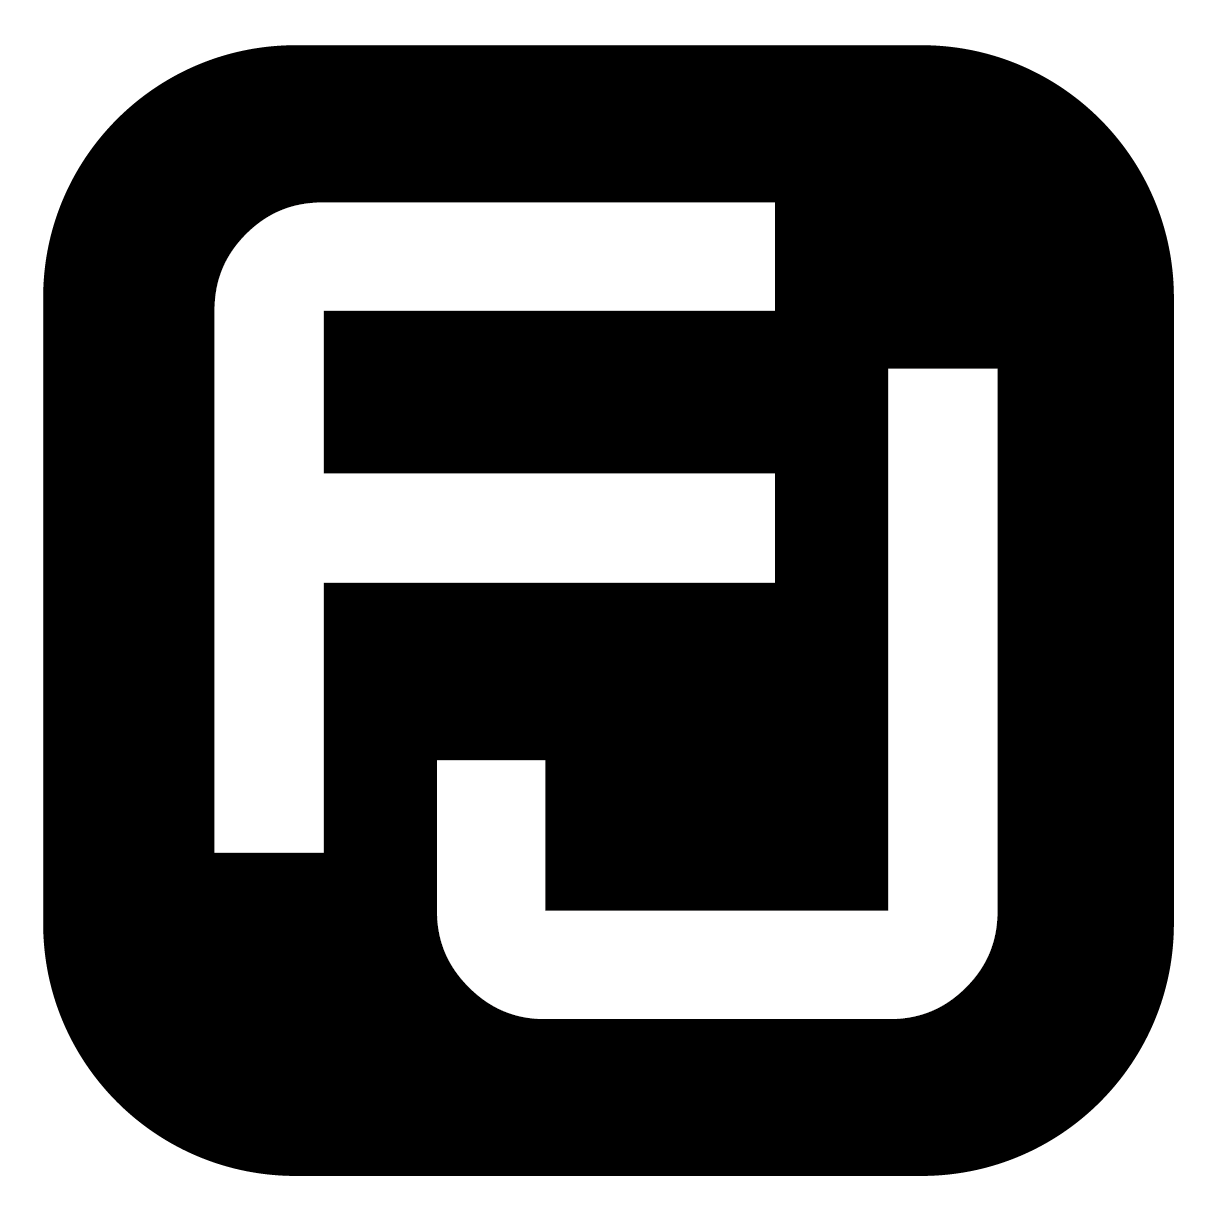 Friese Jongens logo zwart wit vierkant transparant